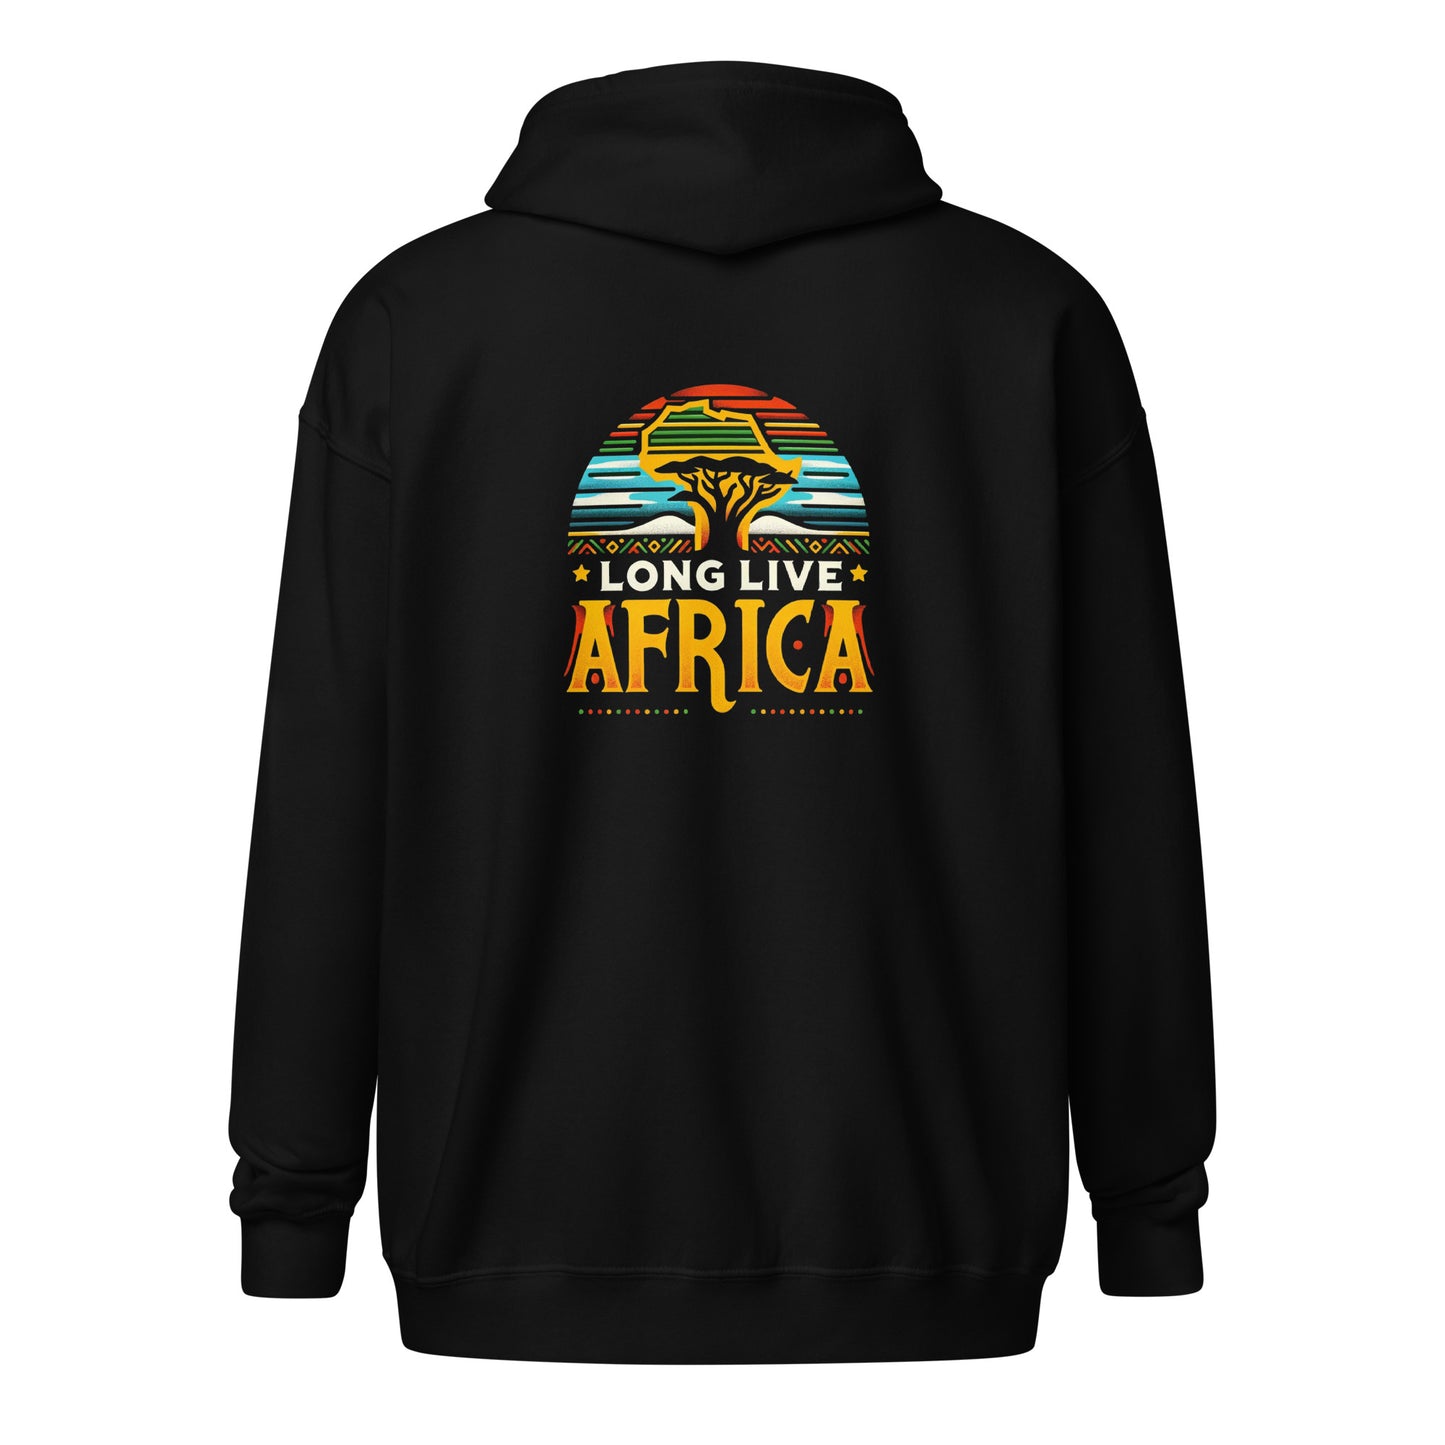 Long Live Africa - Unisex heavy blend zip hoodie